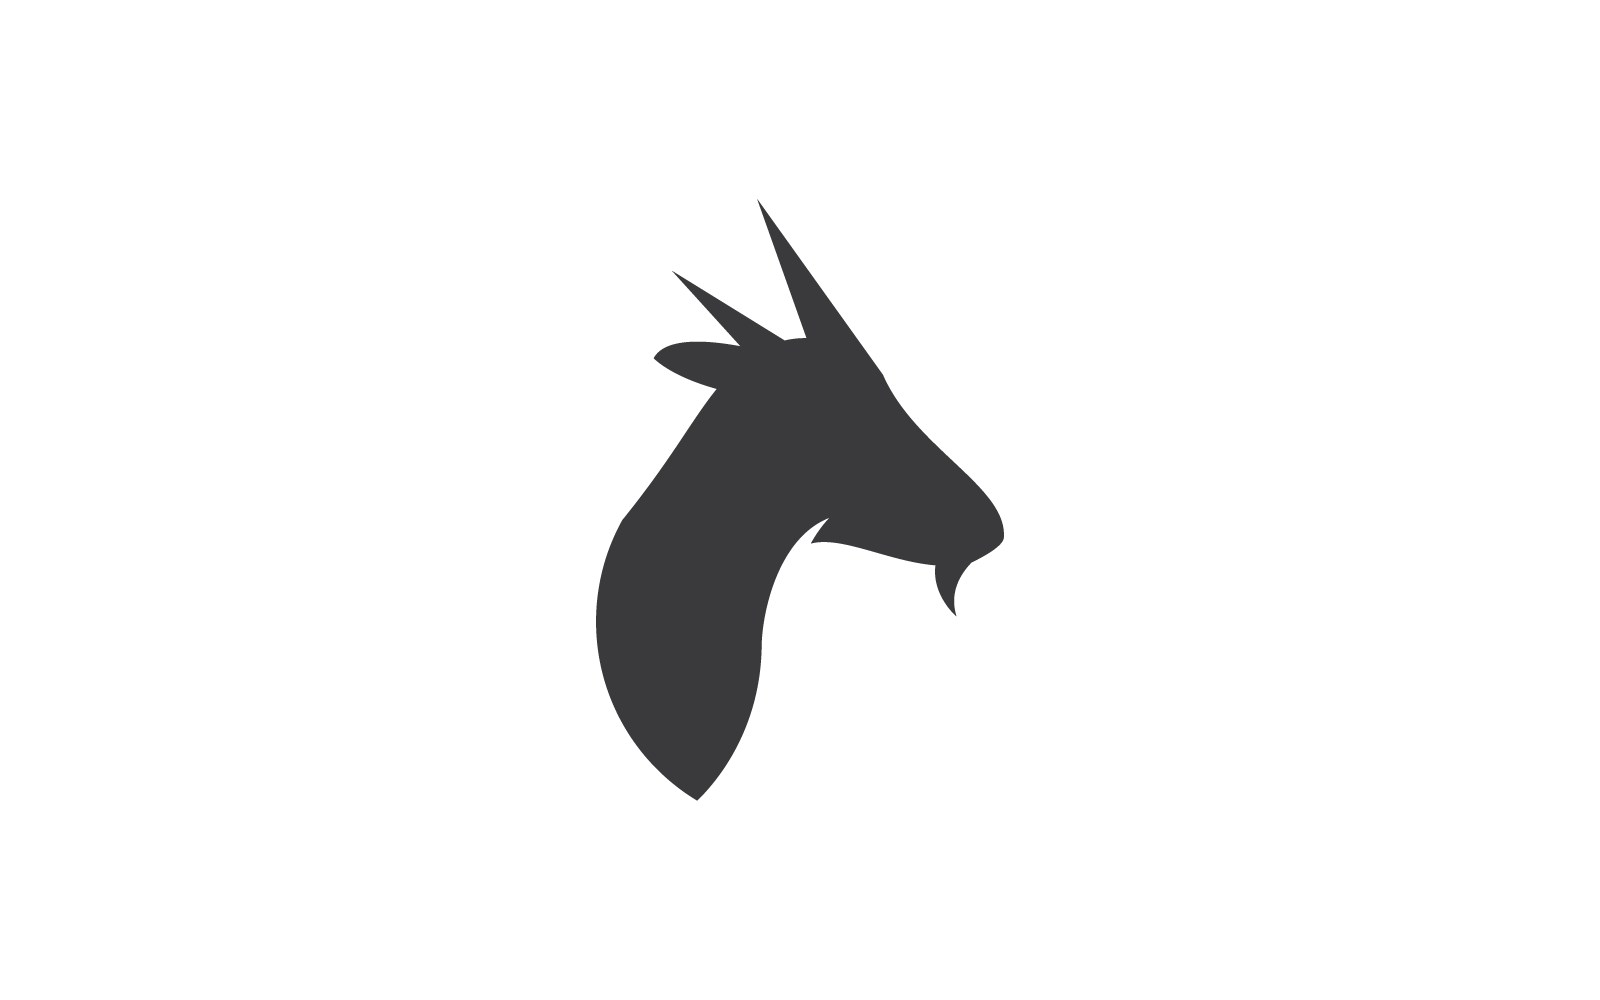 Дизайн шаблона логотипа иллюстрации коз и овец